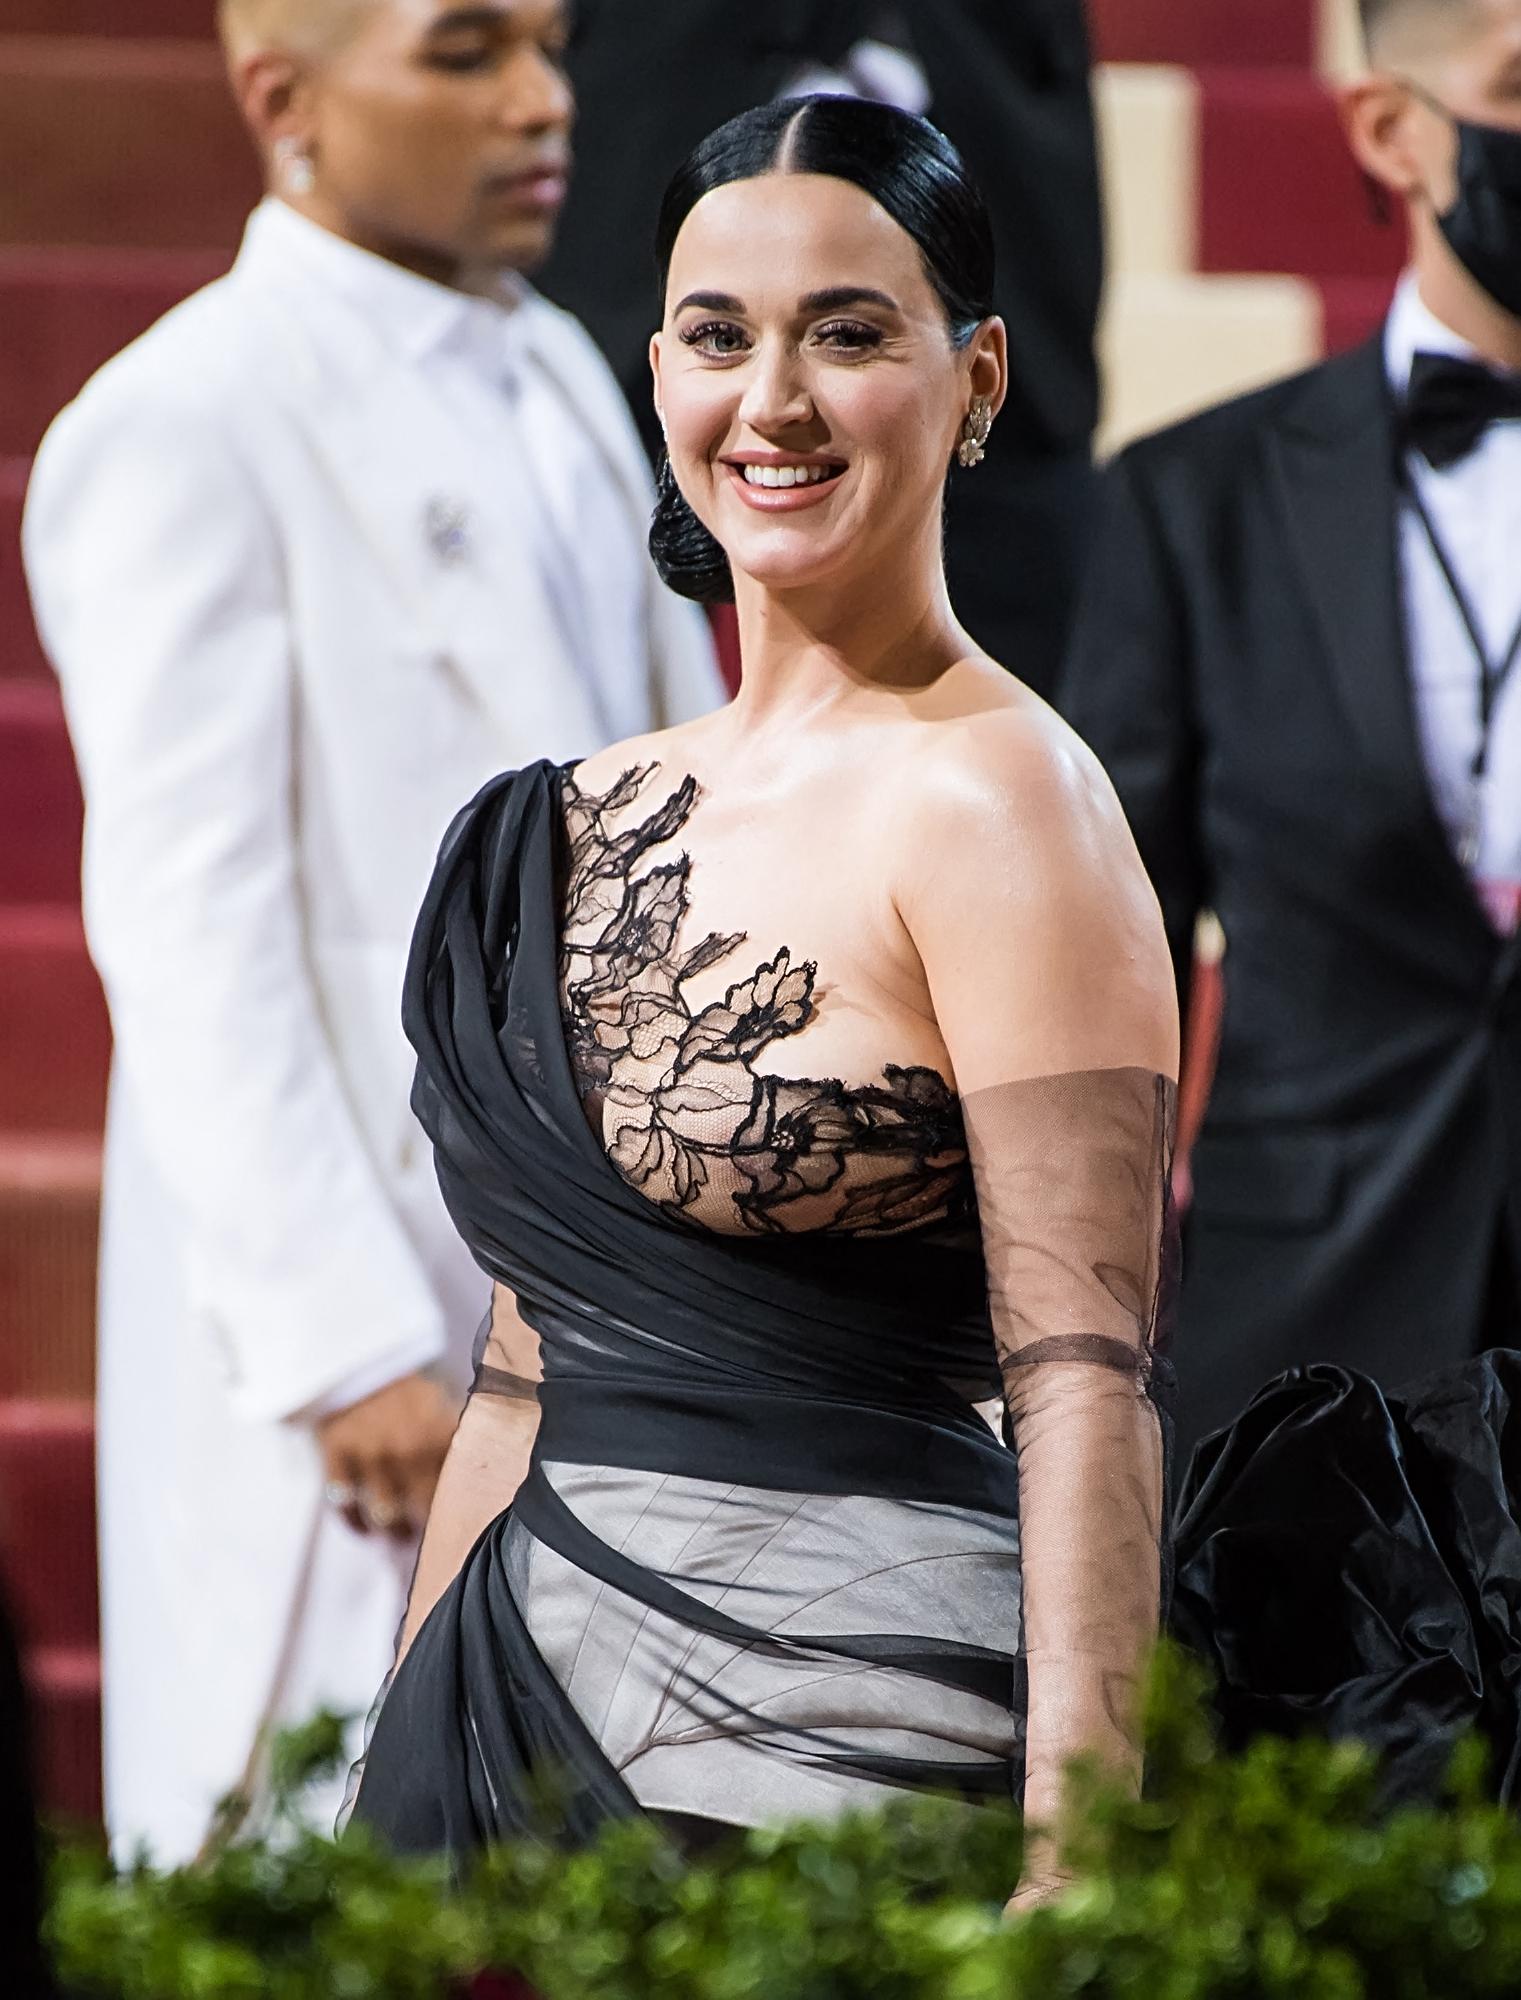 Katy Perry is seen smiling at the 2022 MET Gala